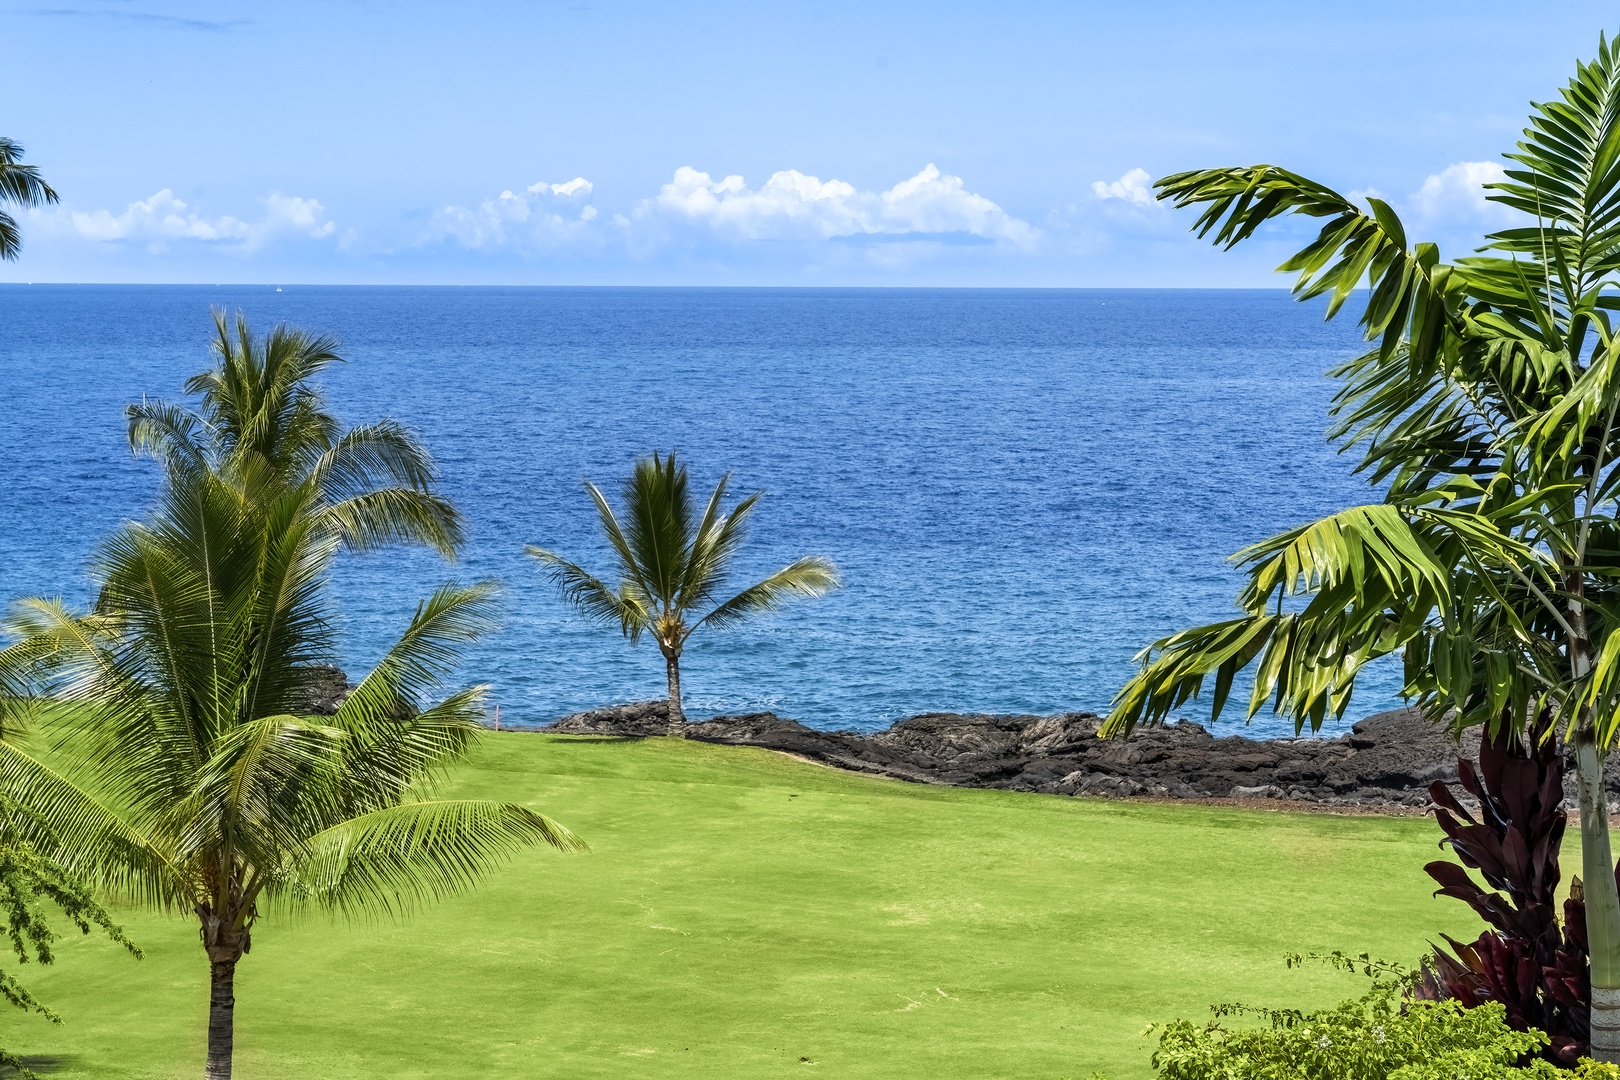 Kailua Kona Vacation Rentals, Golf Green - Views from the yard of the coastline!